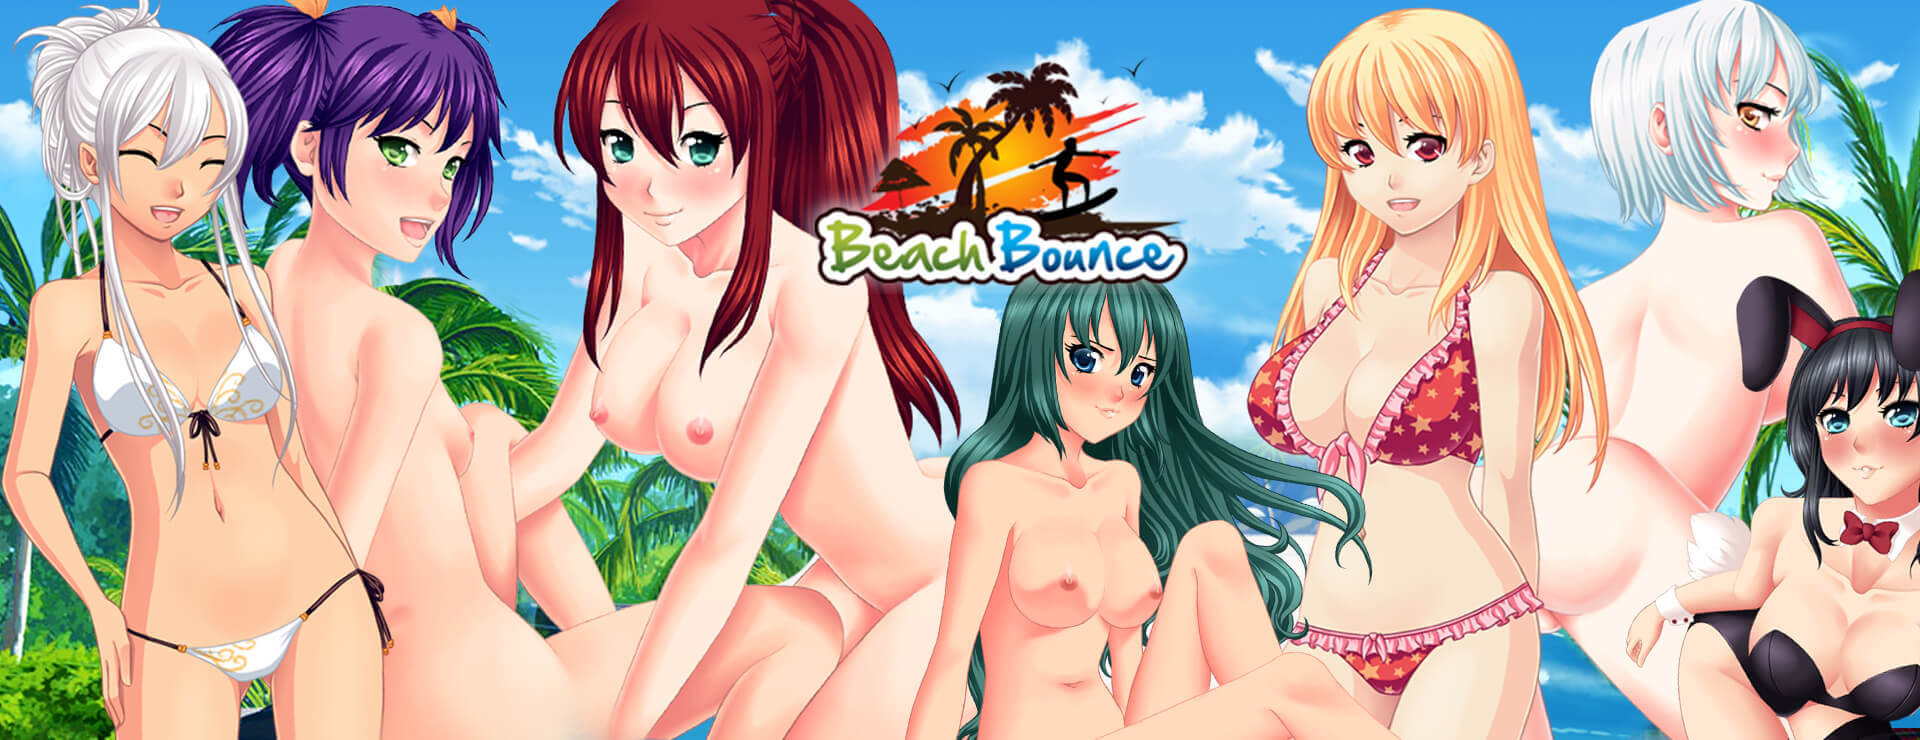 Beach Bounce - Roman Visuel Jeu